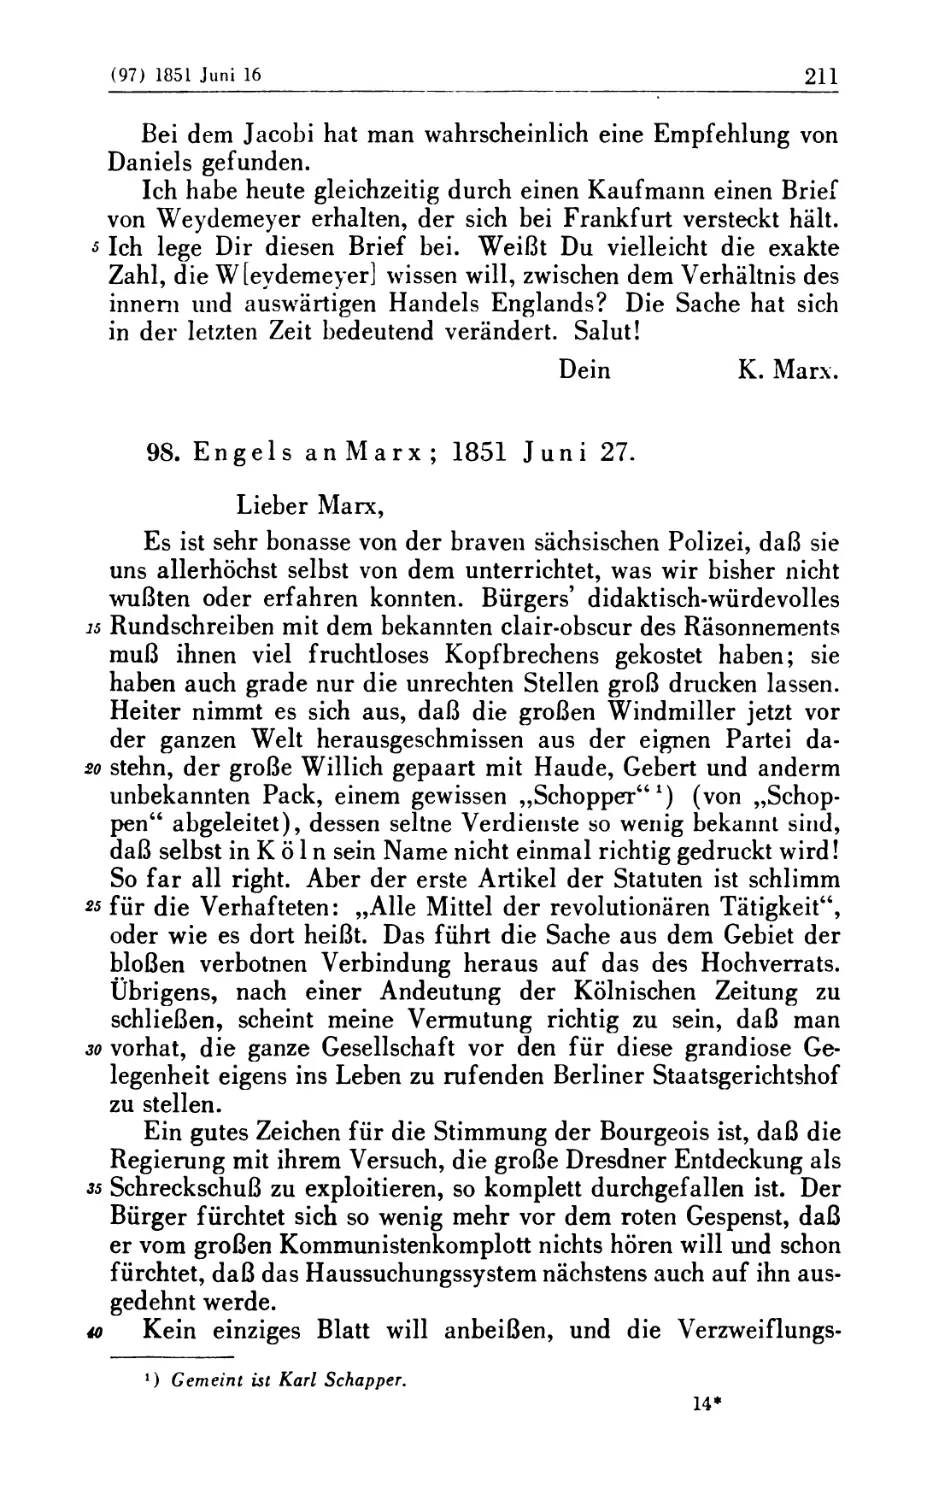 98. Engels an Marx; 1851 Juni 27